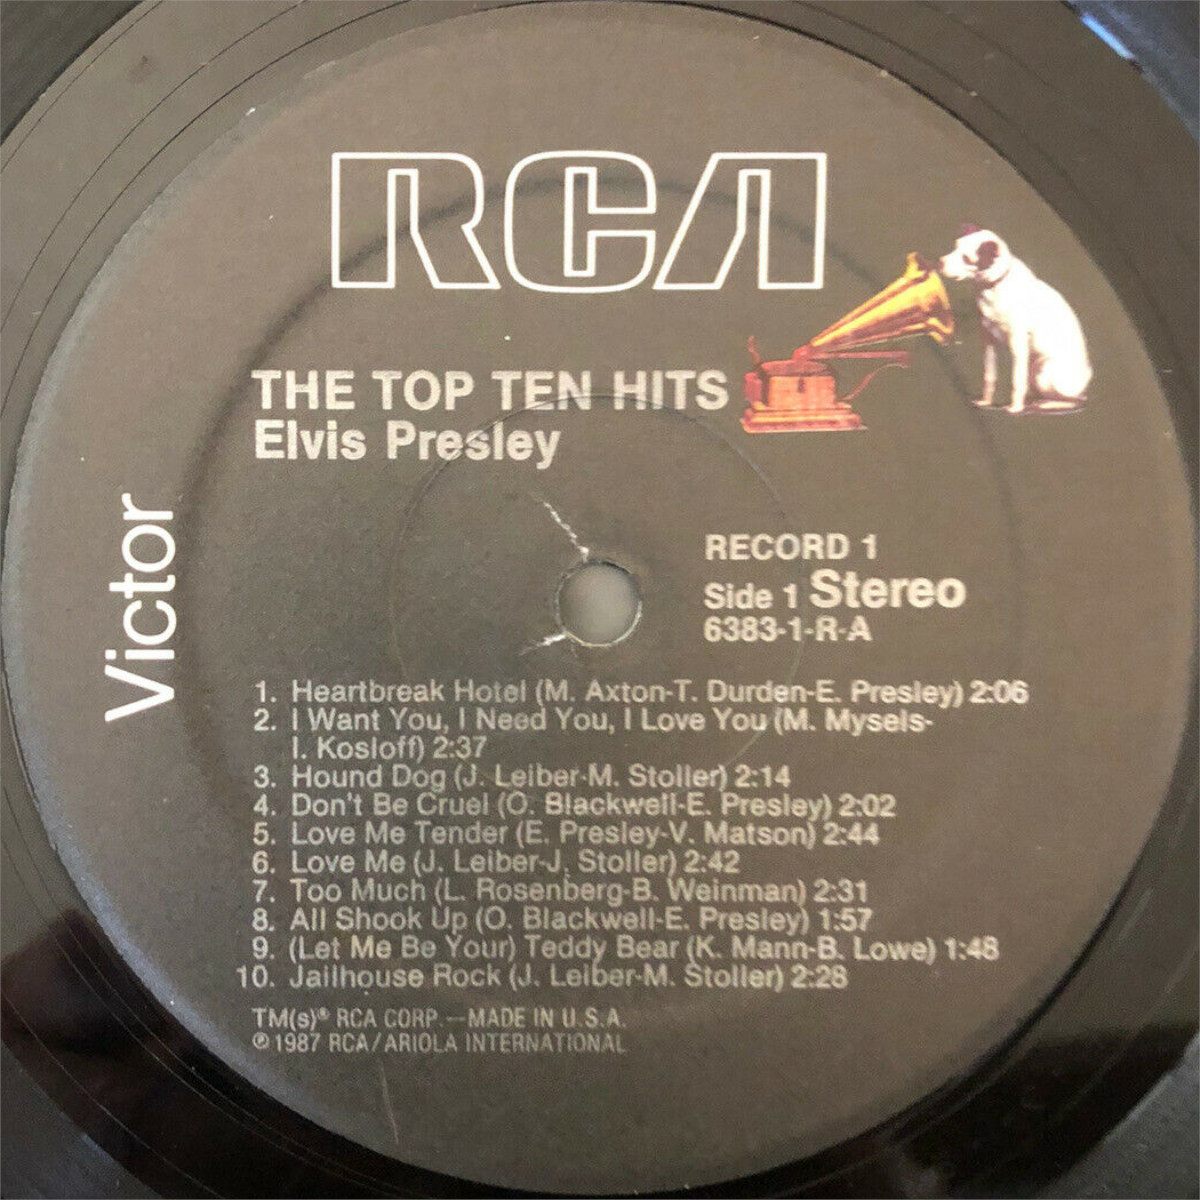 Hits - THE TOP TEN HITS 6383-1-r-cijjti